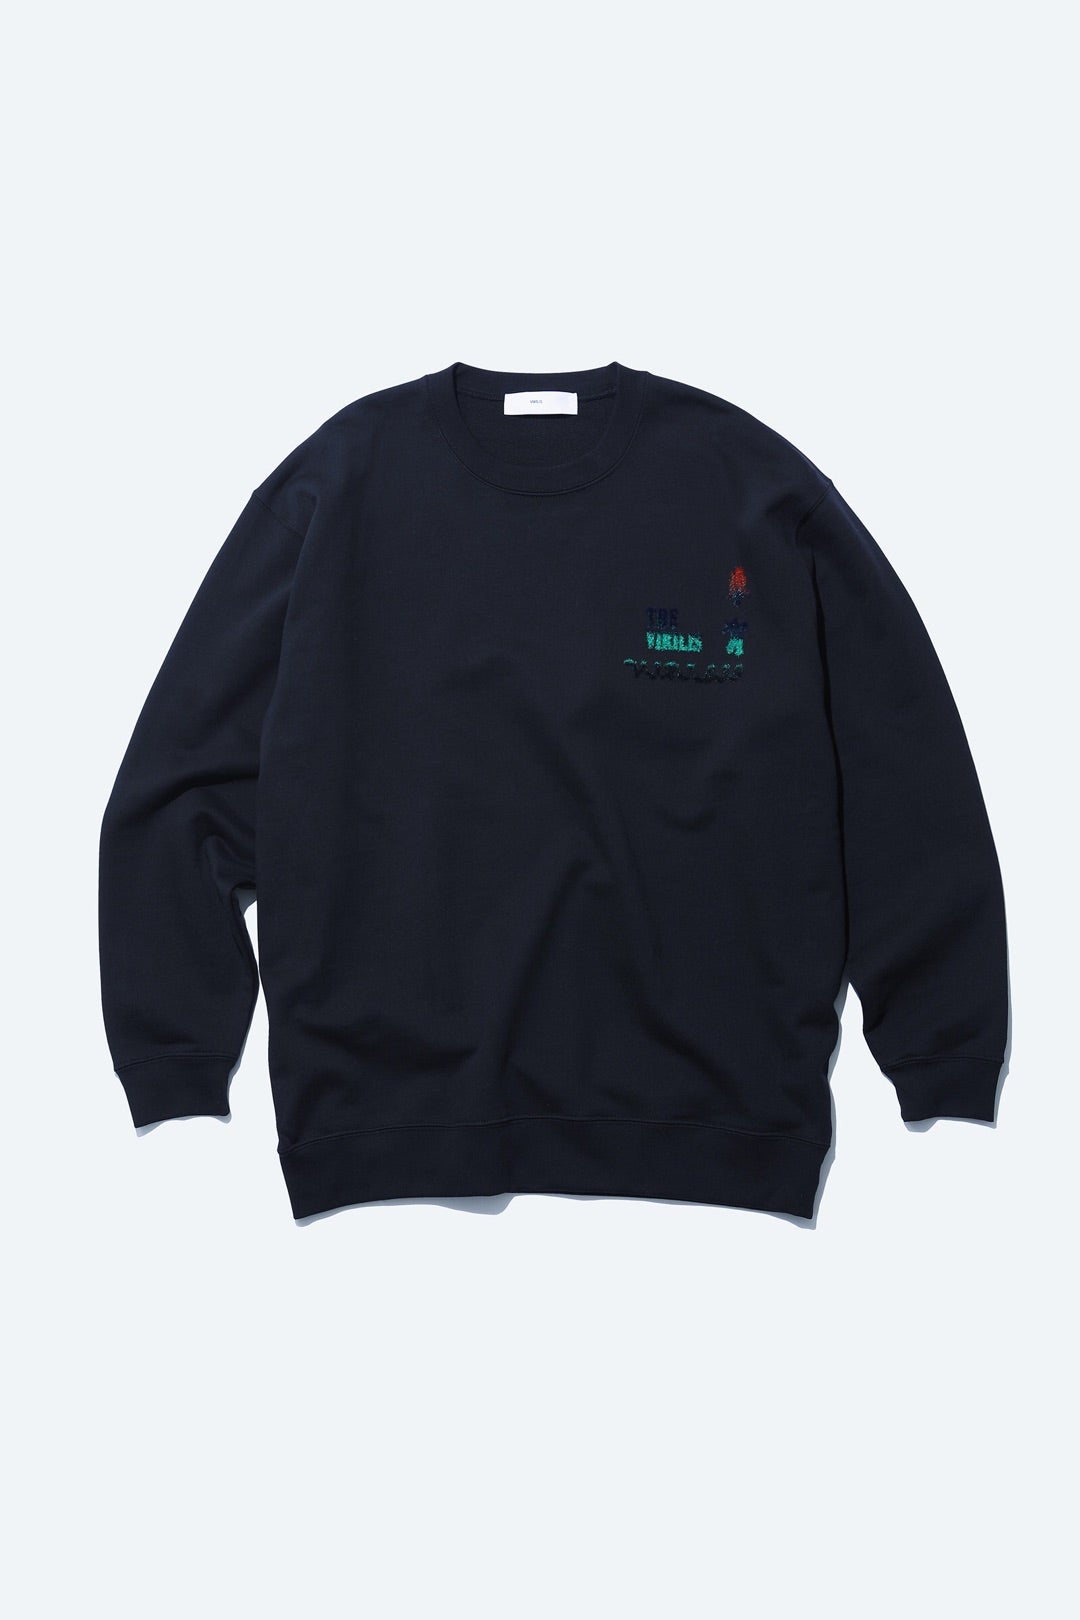 TOGA VIRLIS Flock print sweatshirt | ragazzo cultura